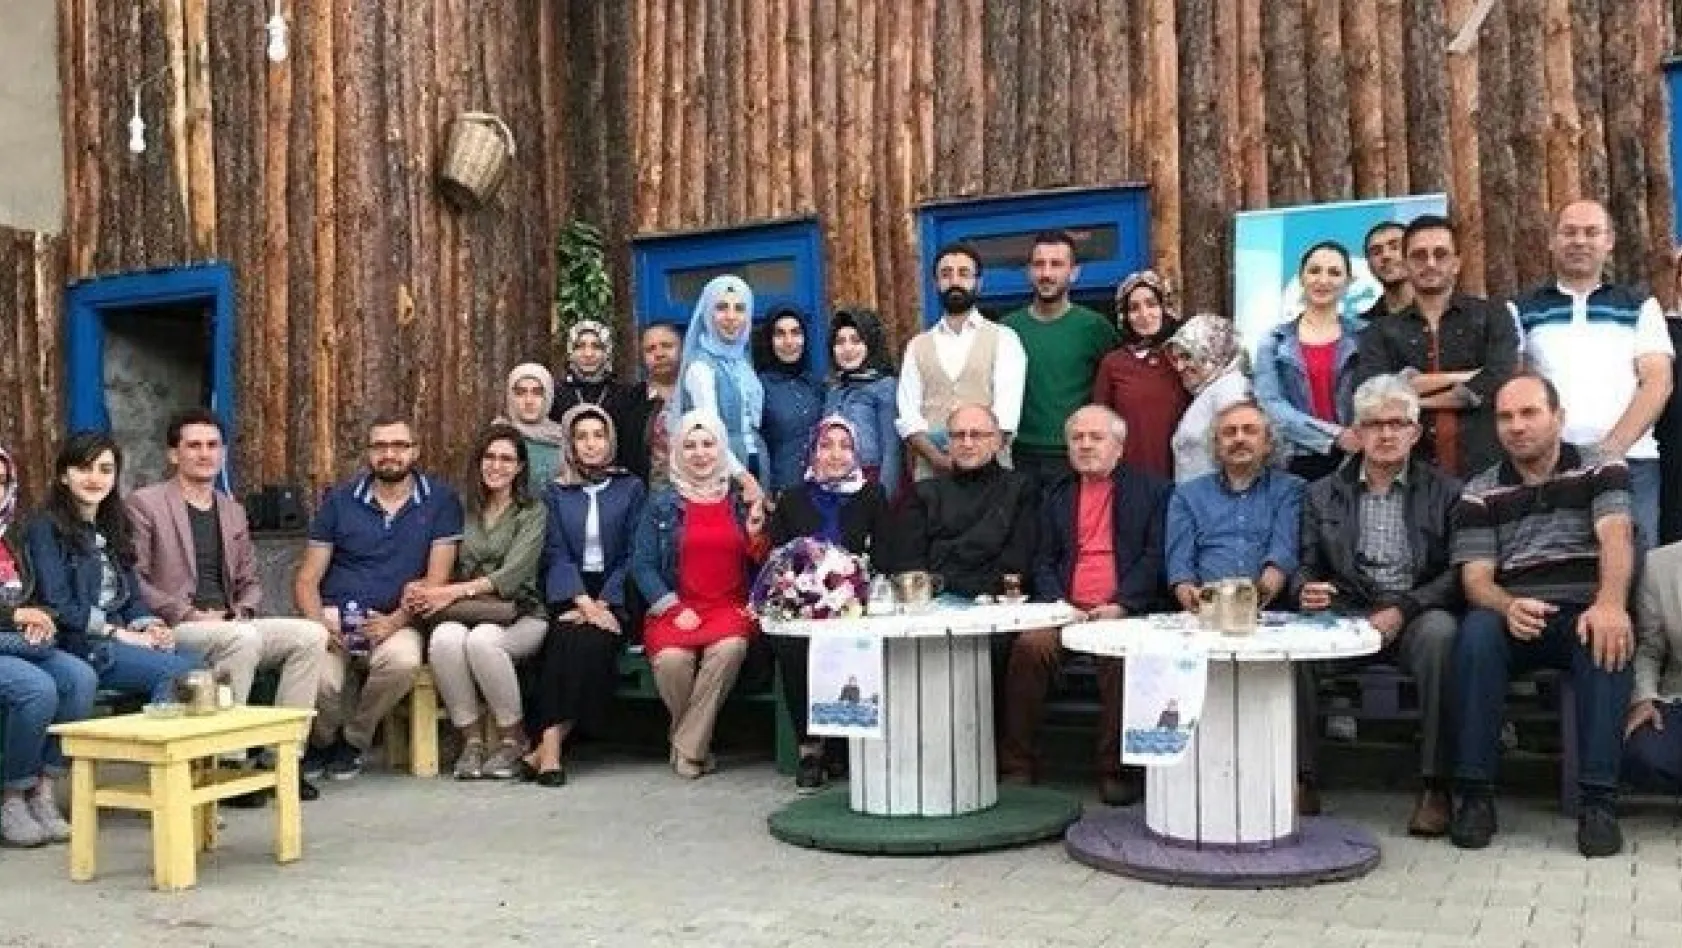 TYB Erzurum Şubesi 2018-2019 faaliyet takvimi duyurdu
